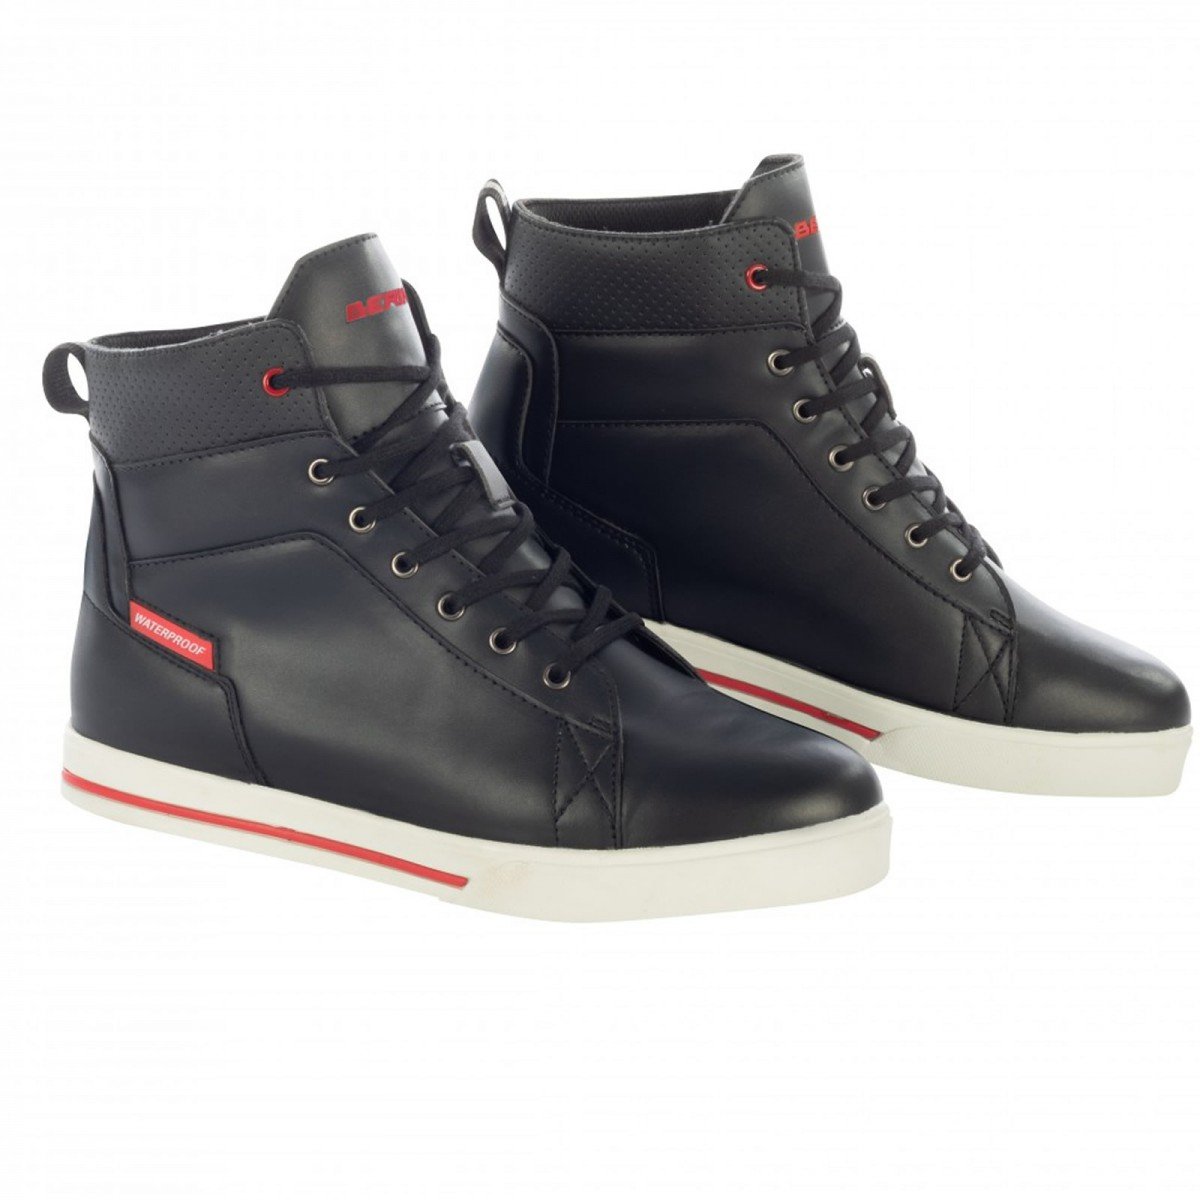 Image of Bering Sneakers Indy Black Red Size 40 EN